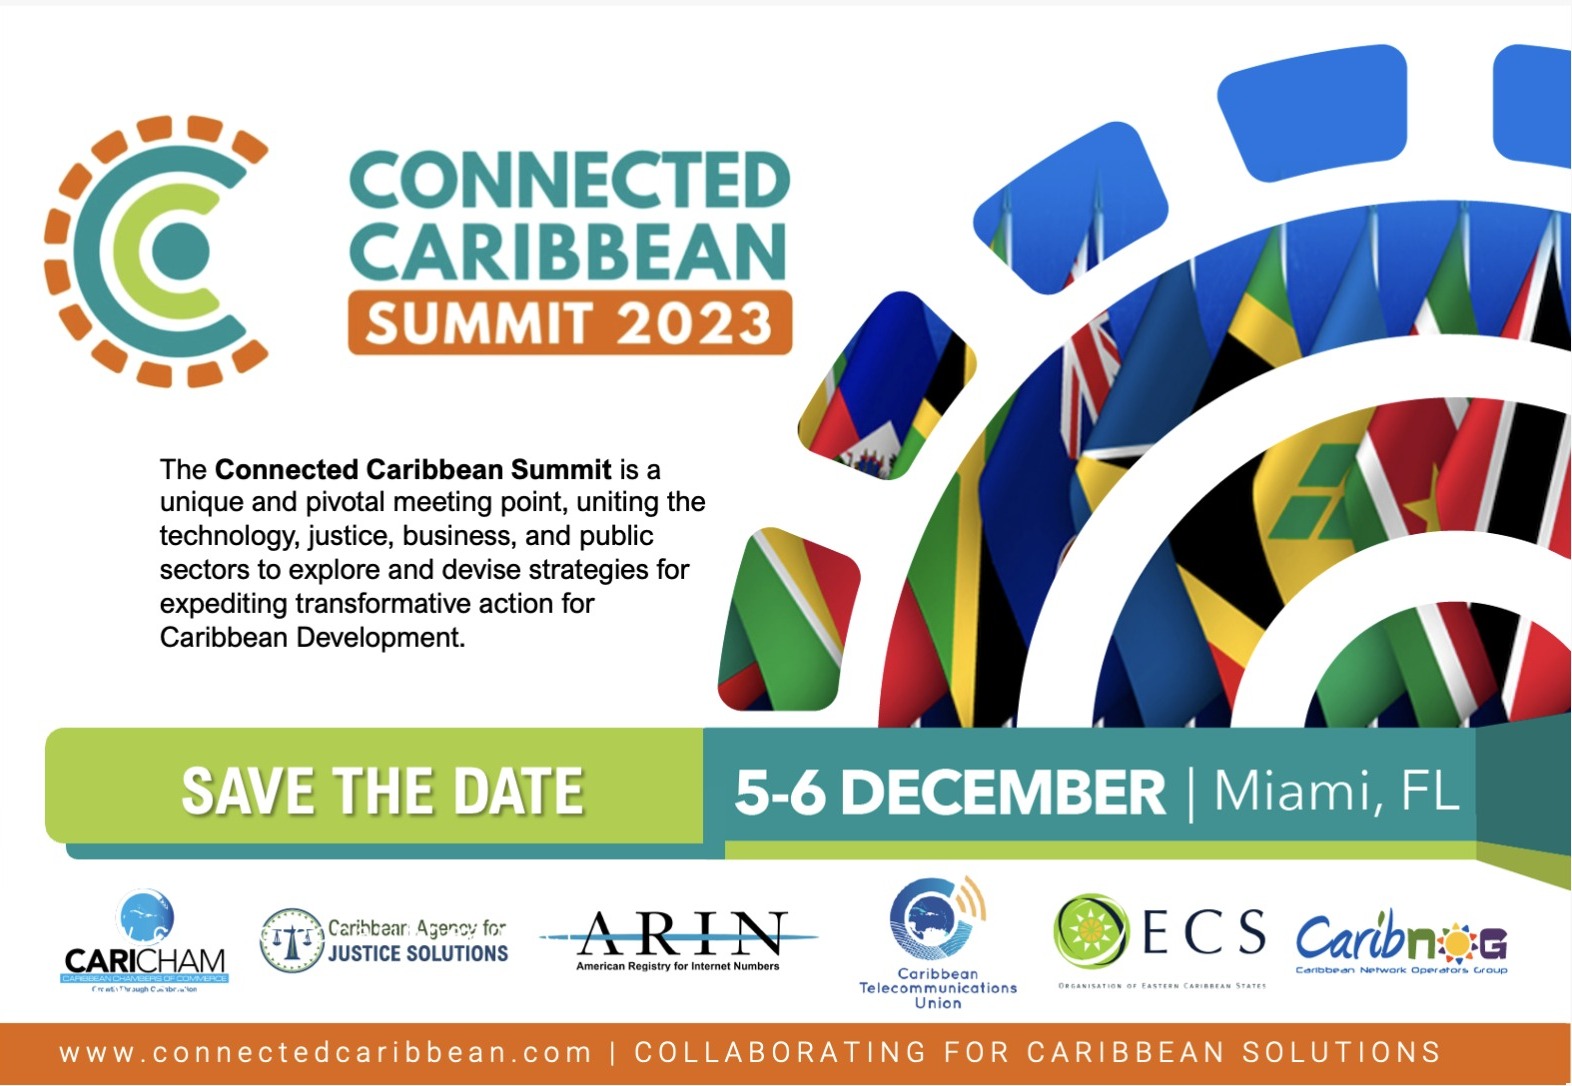 Connected Caribbean Summit 2023 @ Miami, Florida